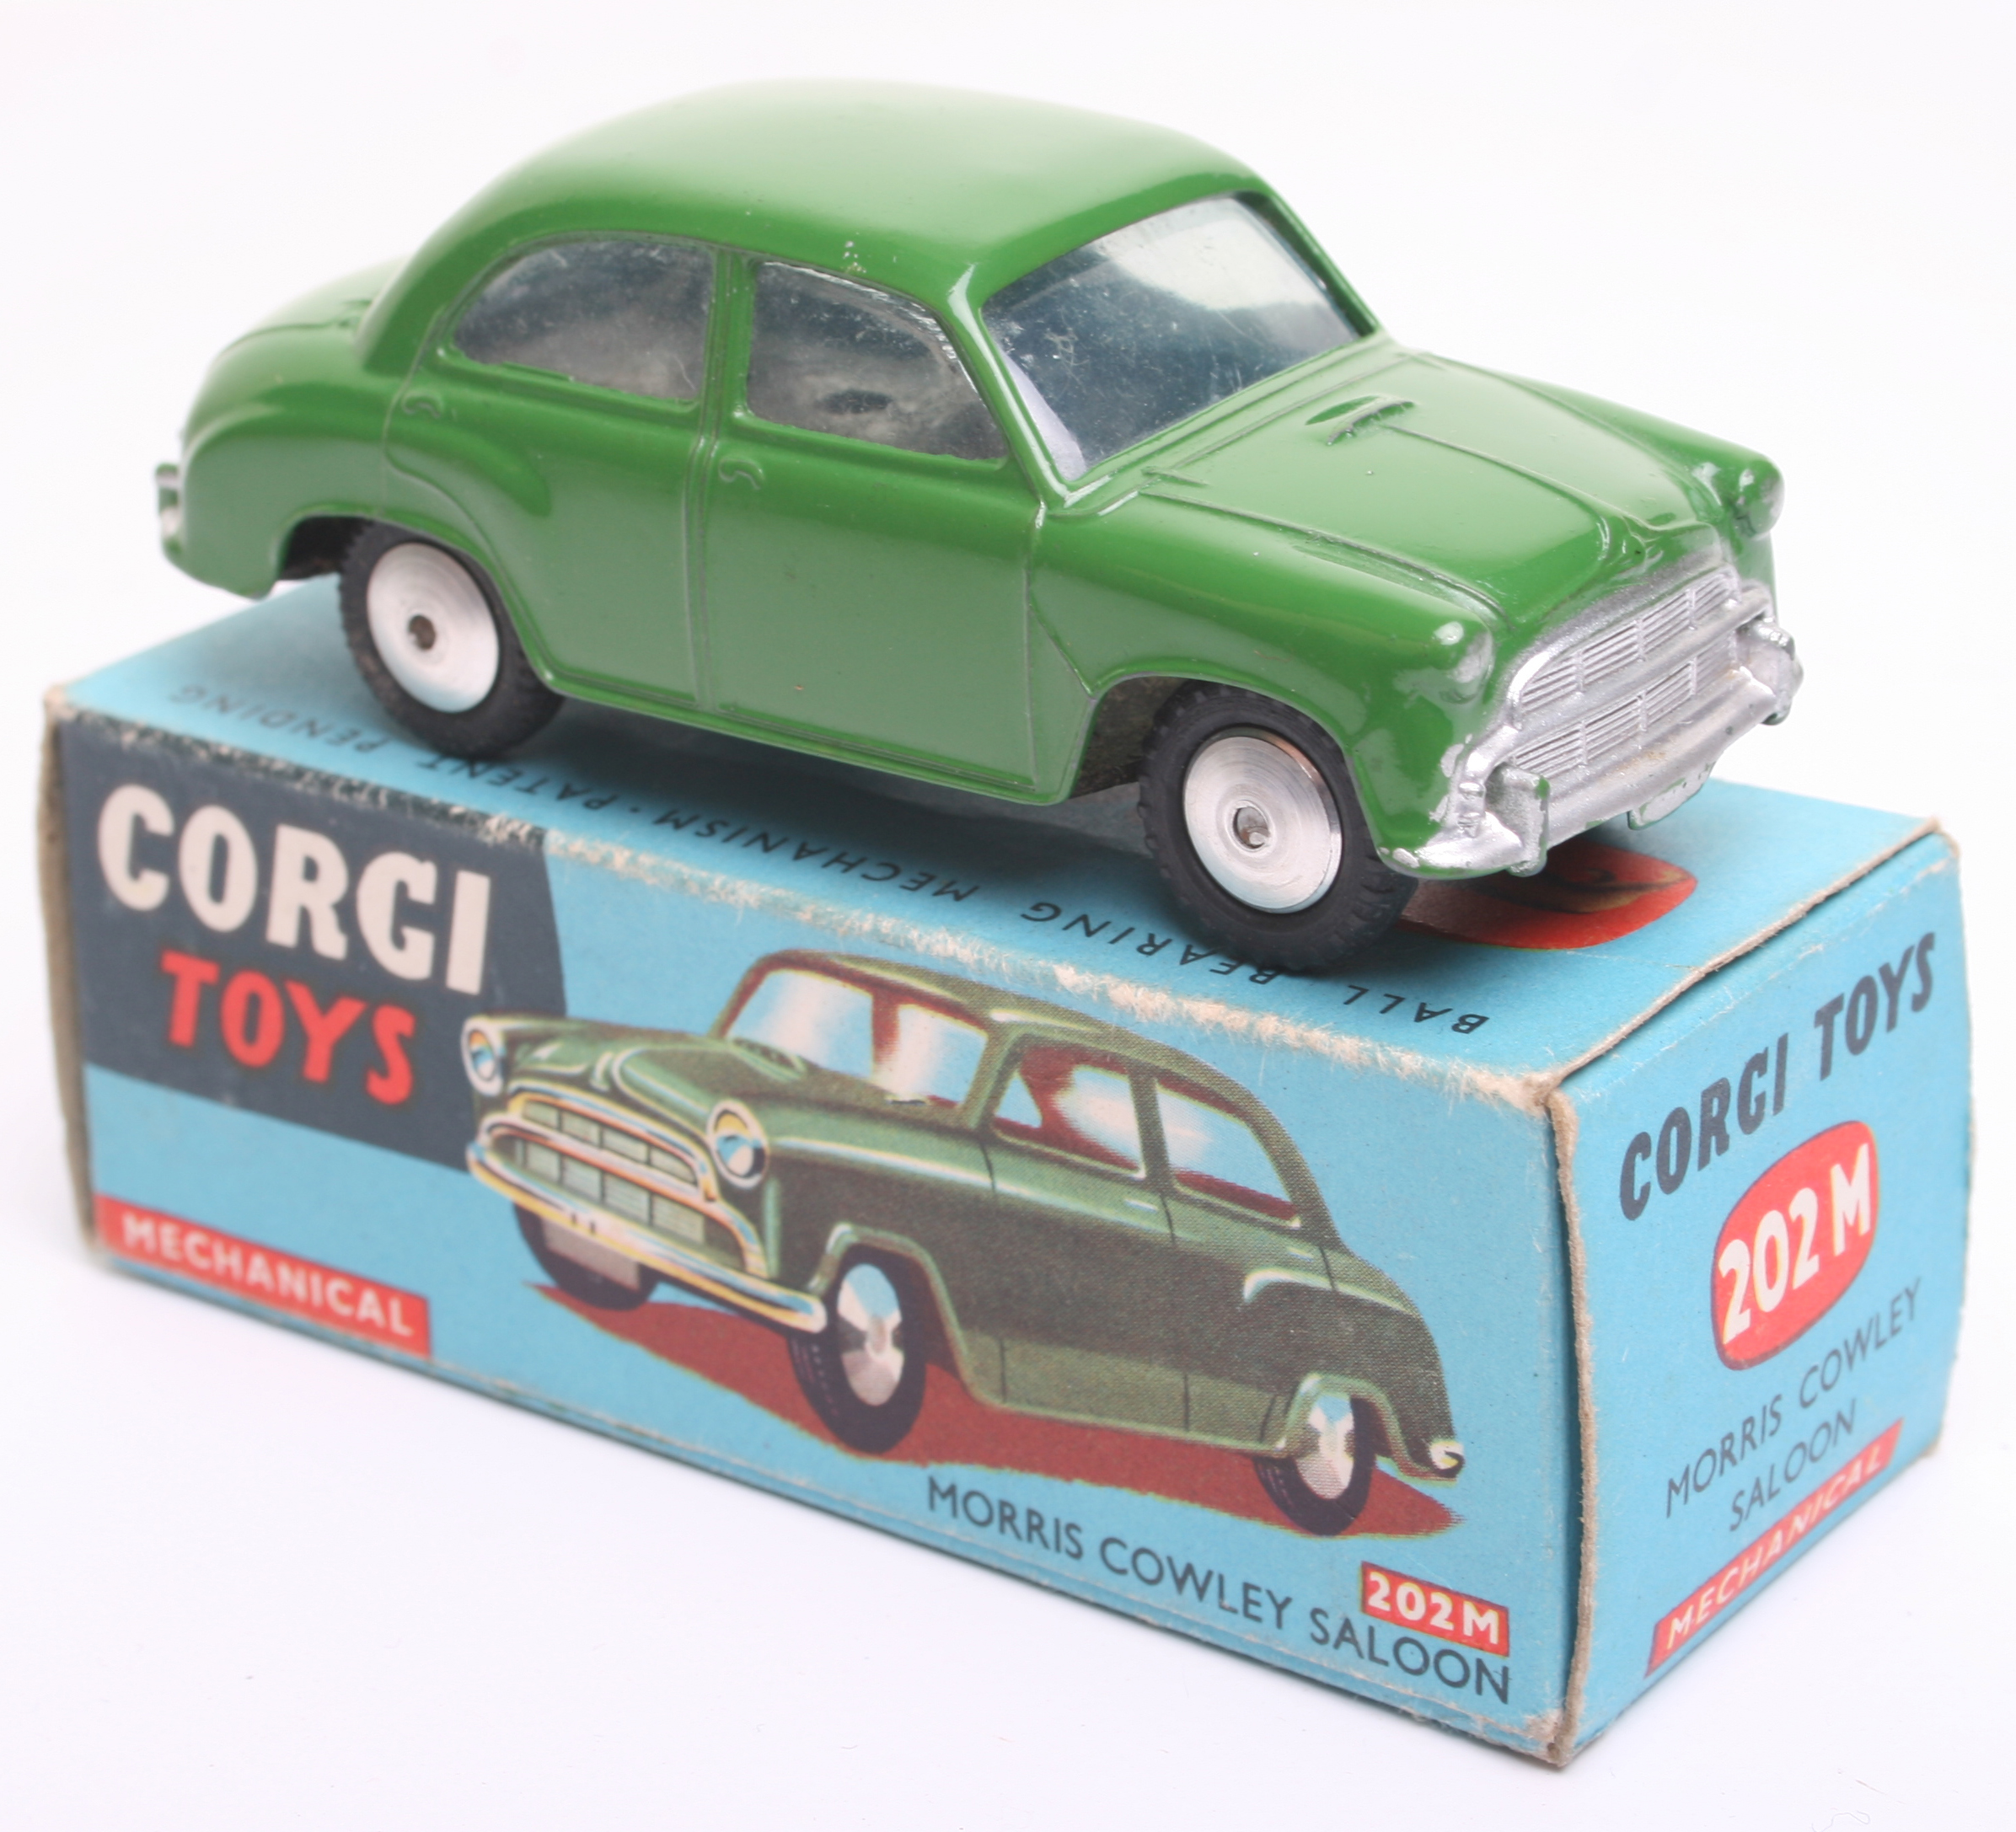 Corgi Toys 202M Morris Cowley Saloon Car, green  body, flat spun wheels,with flywheel motor in